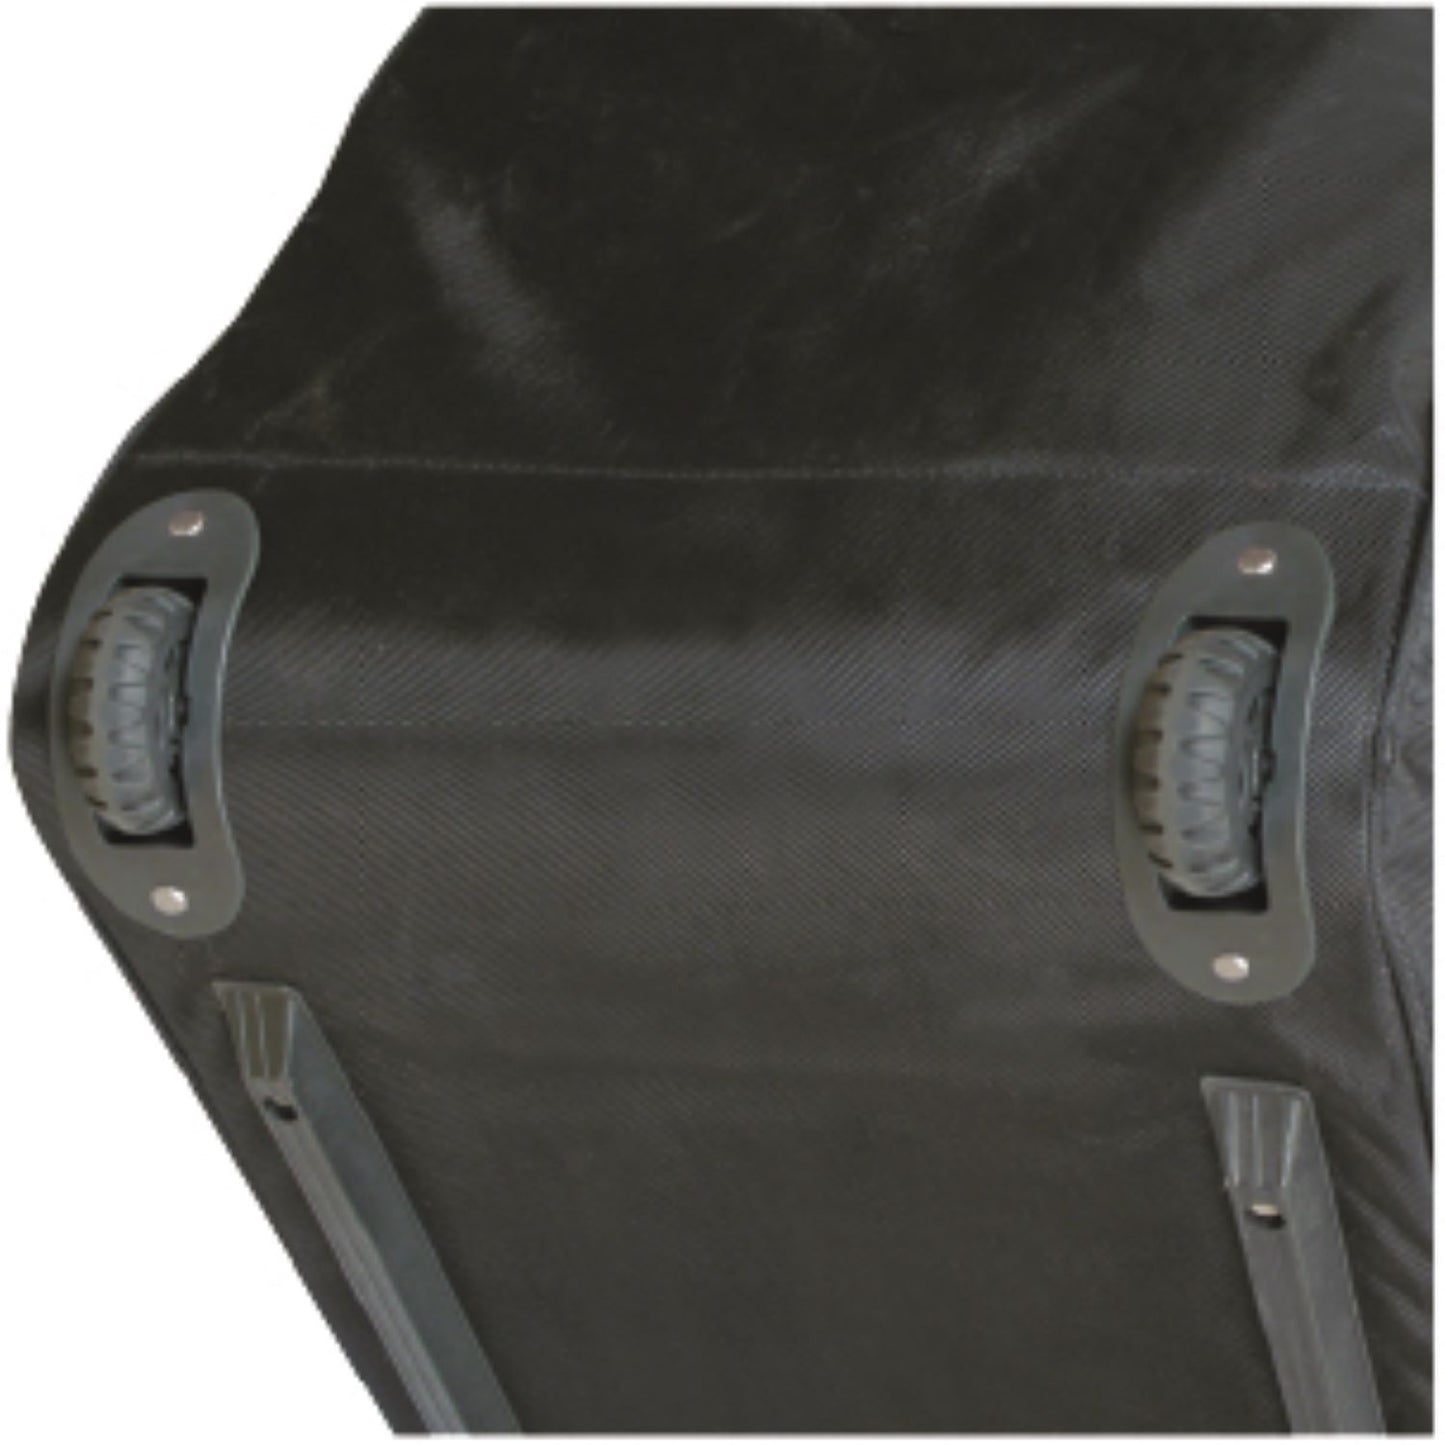 Geoffrey Beene Jumbo 36” Duffle Wheeler Luggage, Black w/ Red